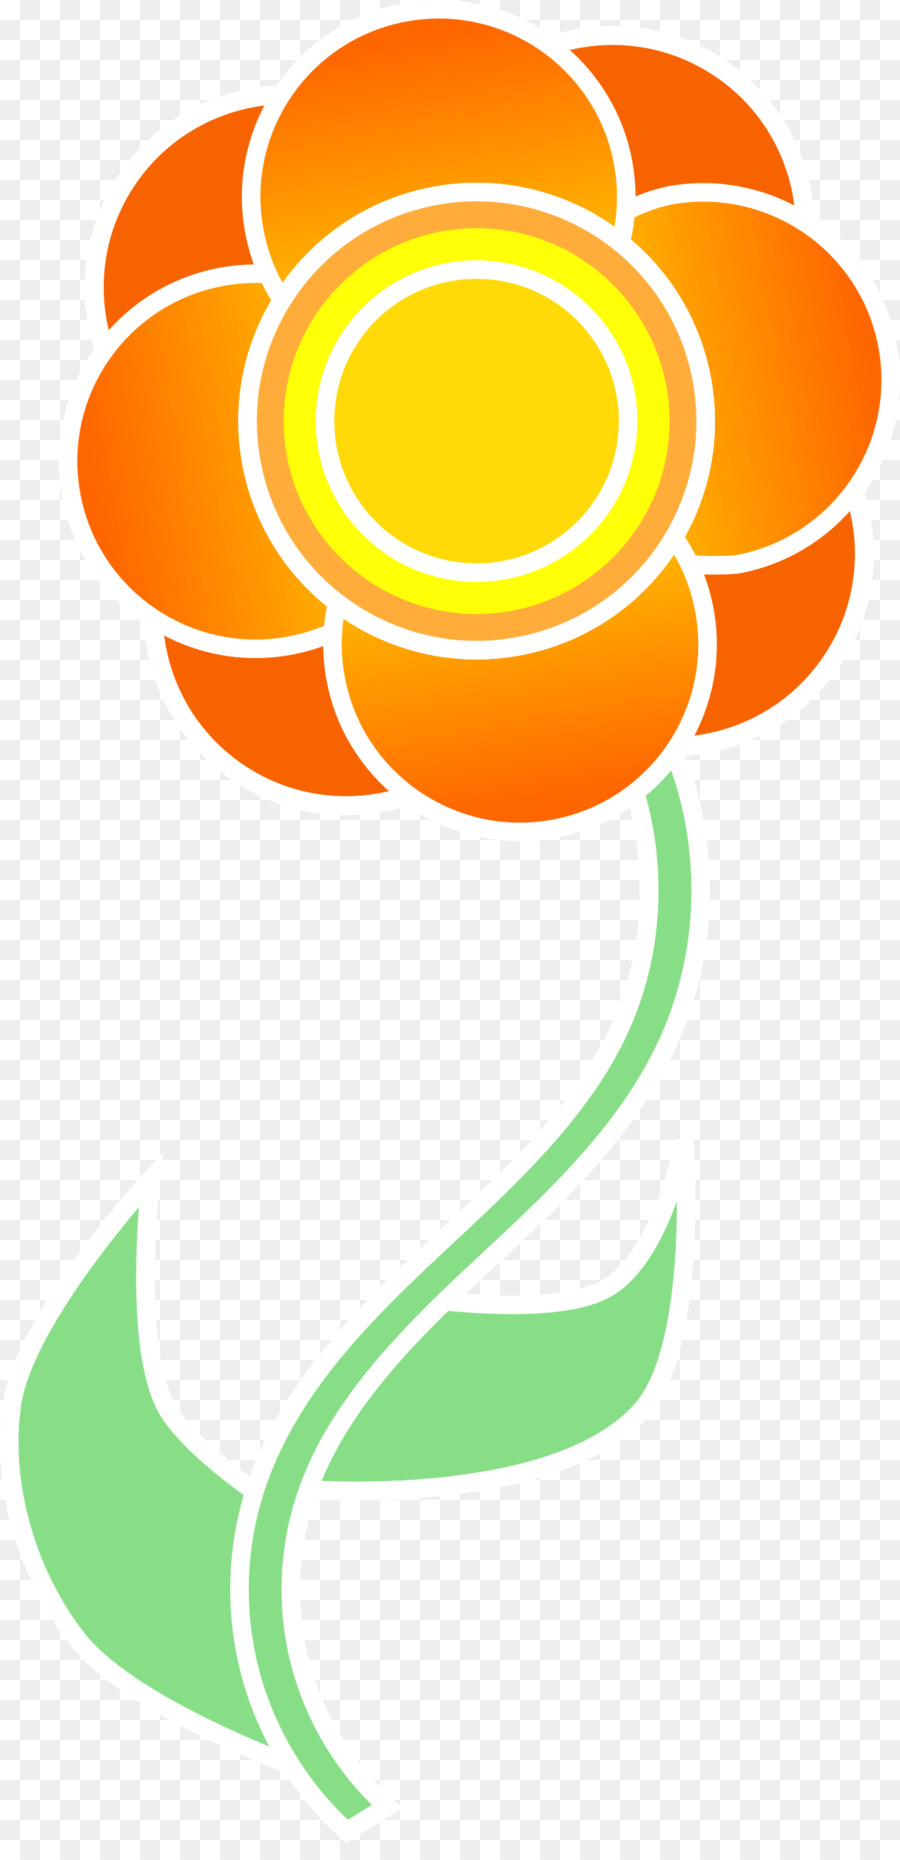 Fiore di Lilium Gialli Clip art - fiore